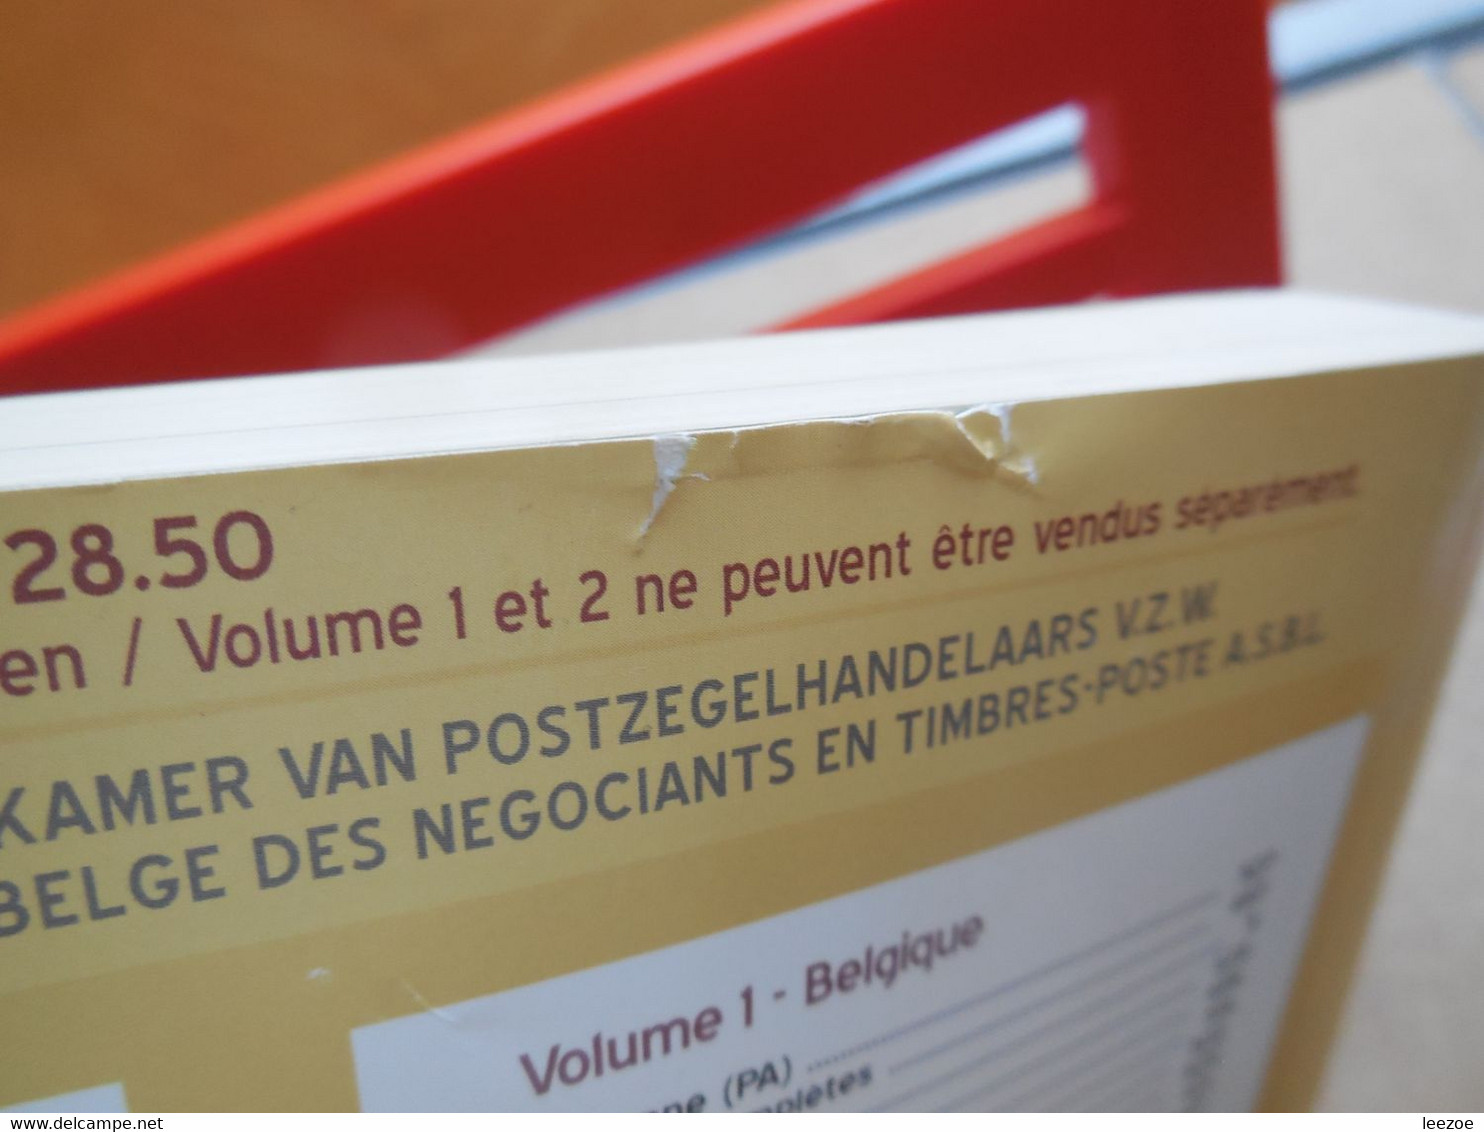 Officiële Postzegelcatalogus, Catalogue Officiel De Timbres Postes Belge De 2013. - Belgio